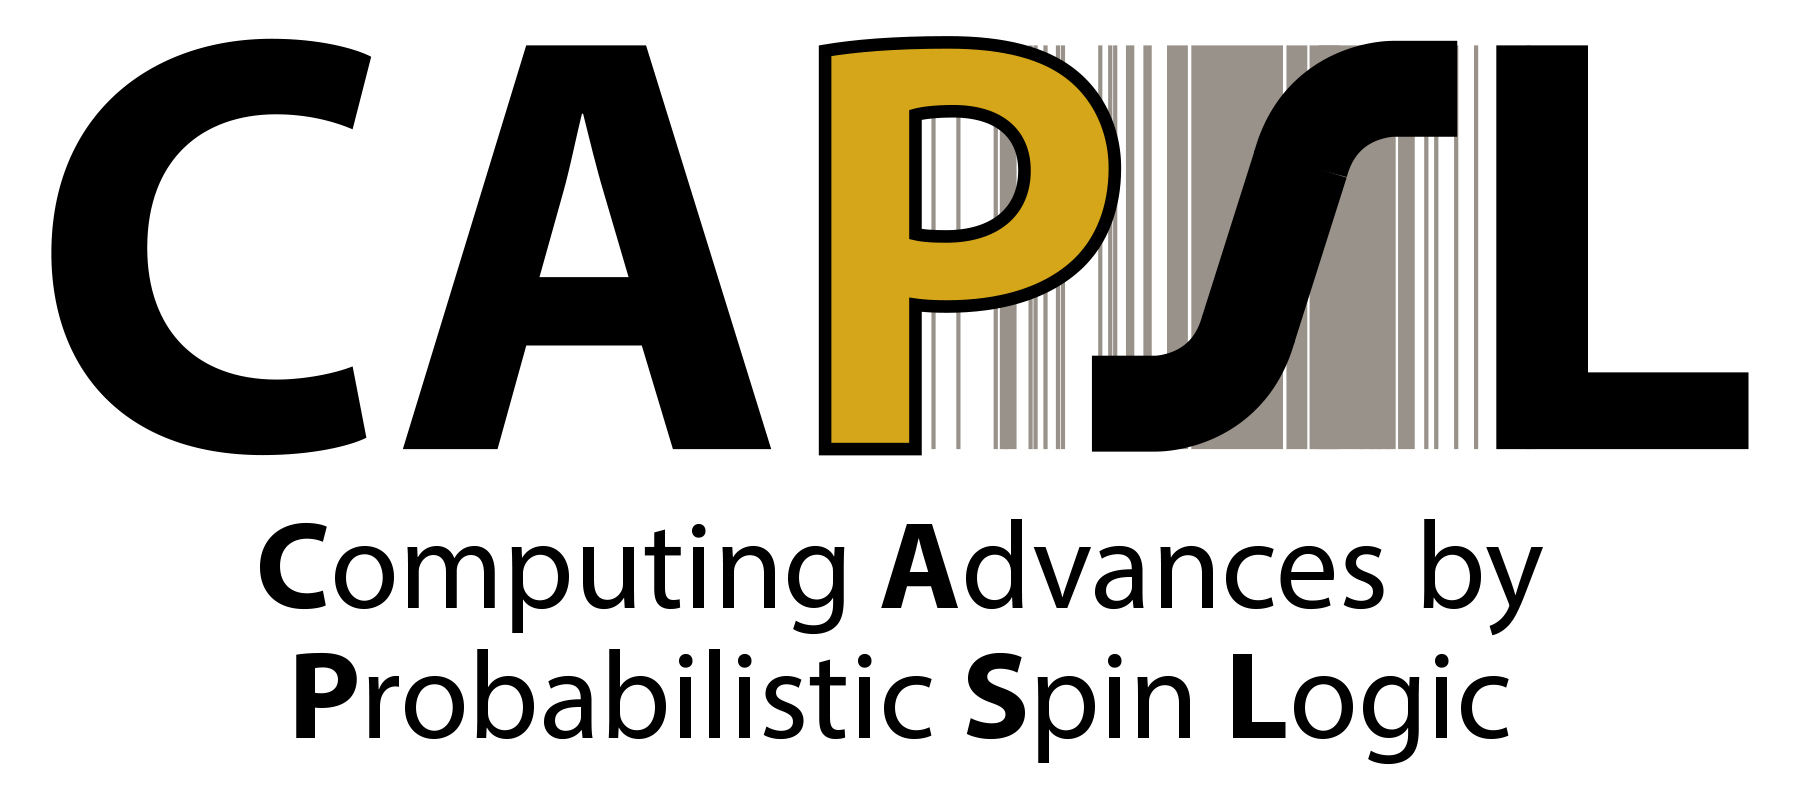 CAPSL logo